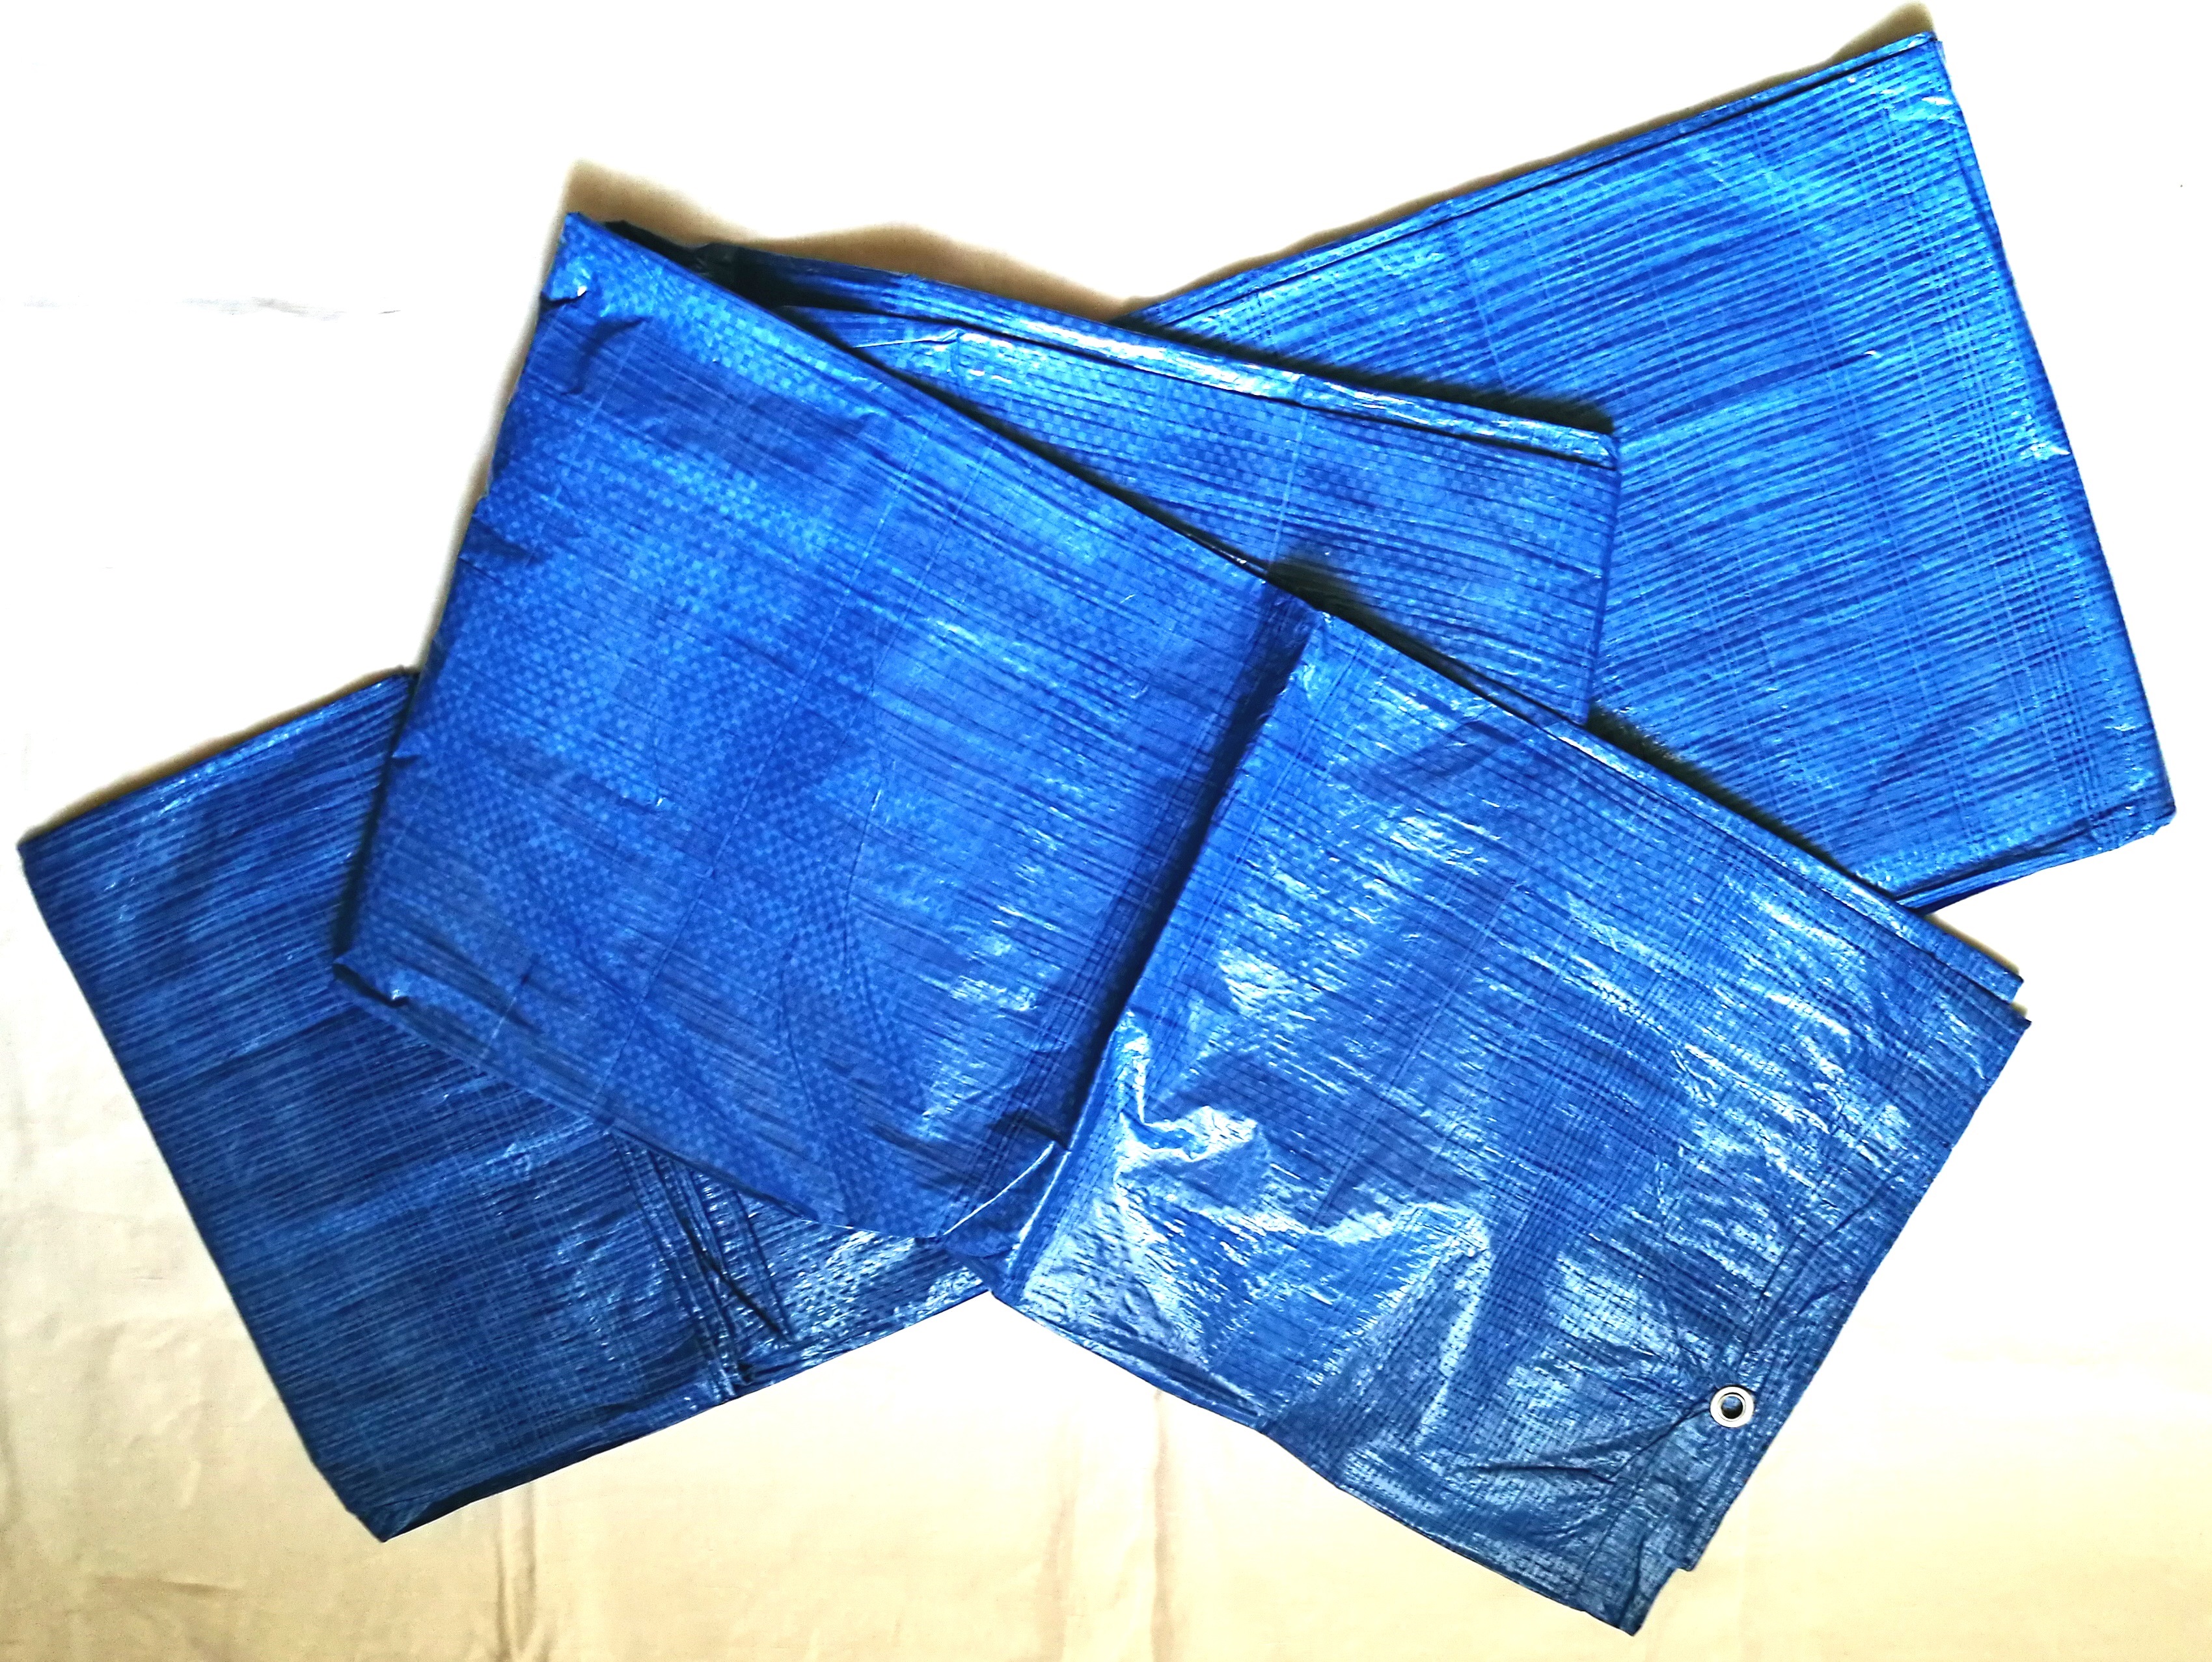 Blanket 50g/m2 15m x 16m (blue)